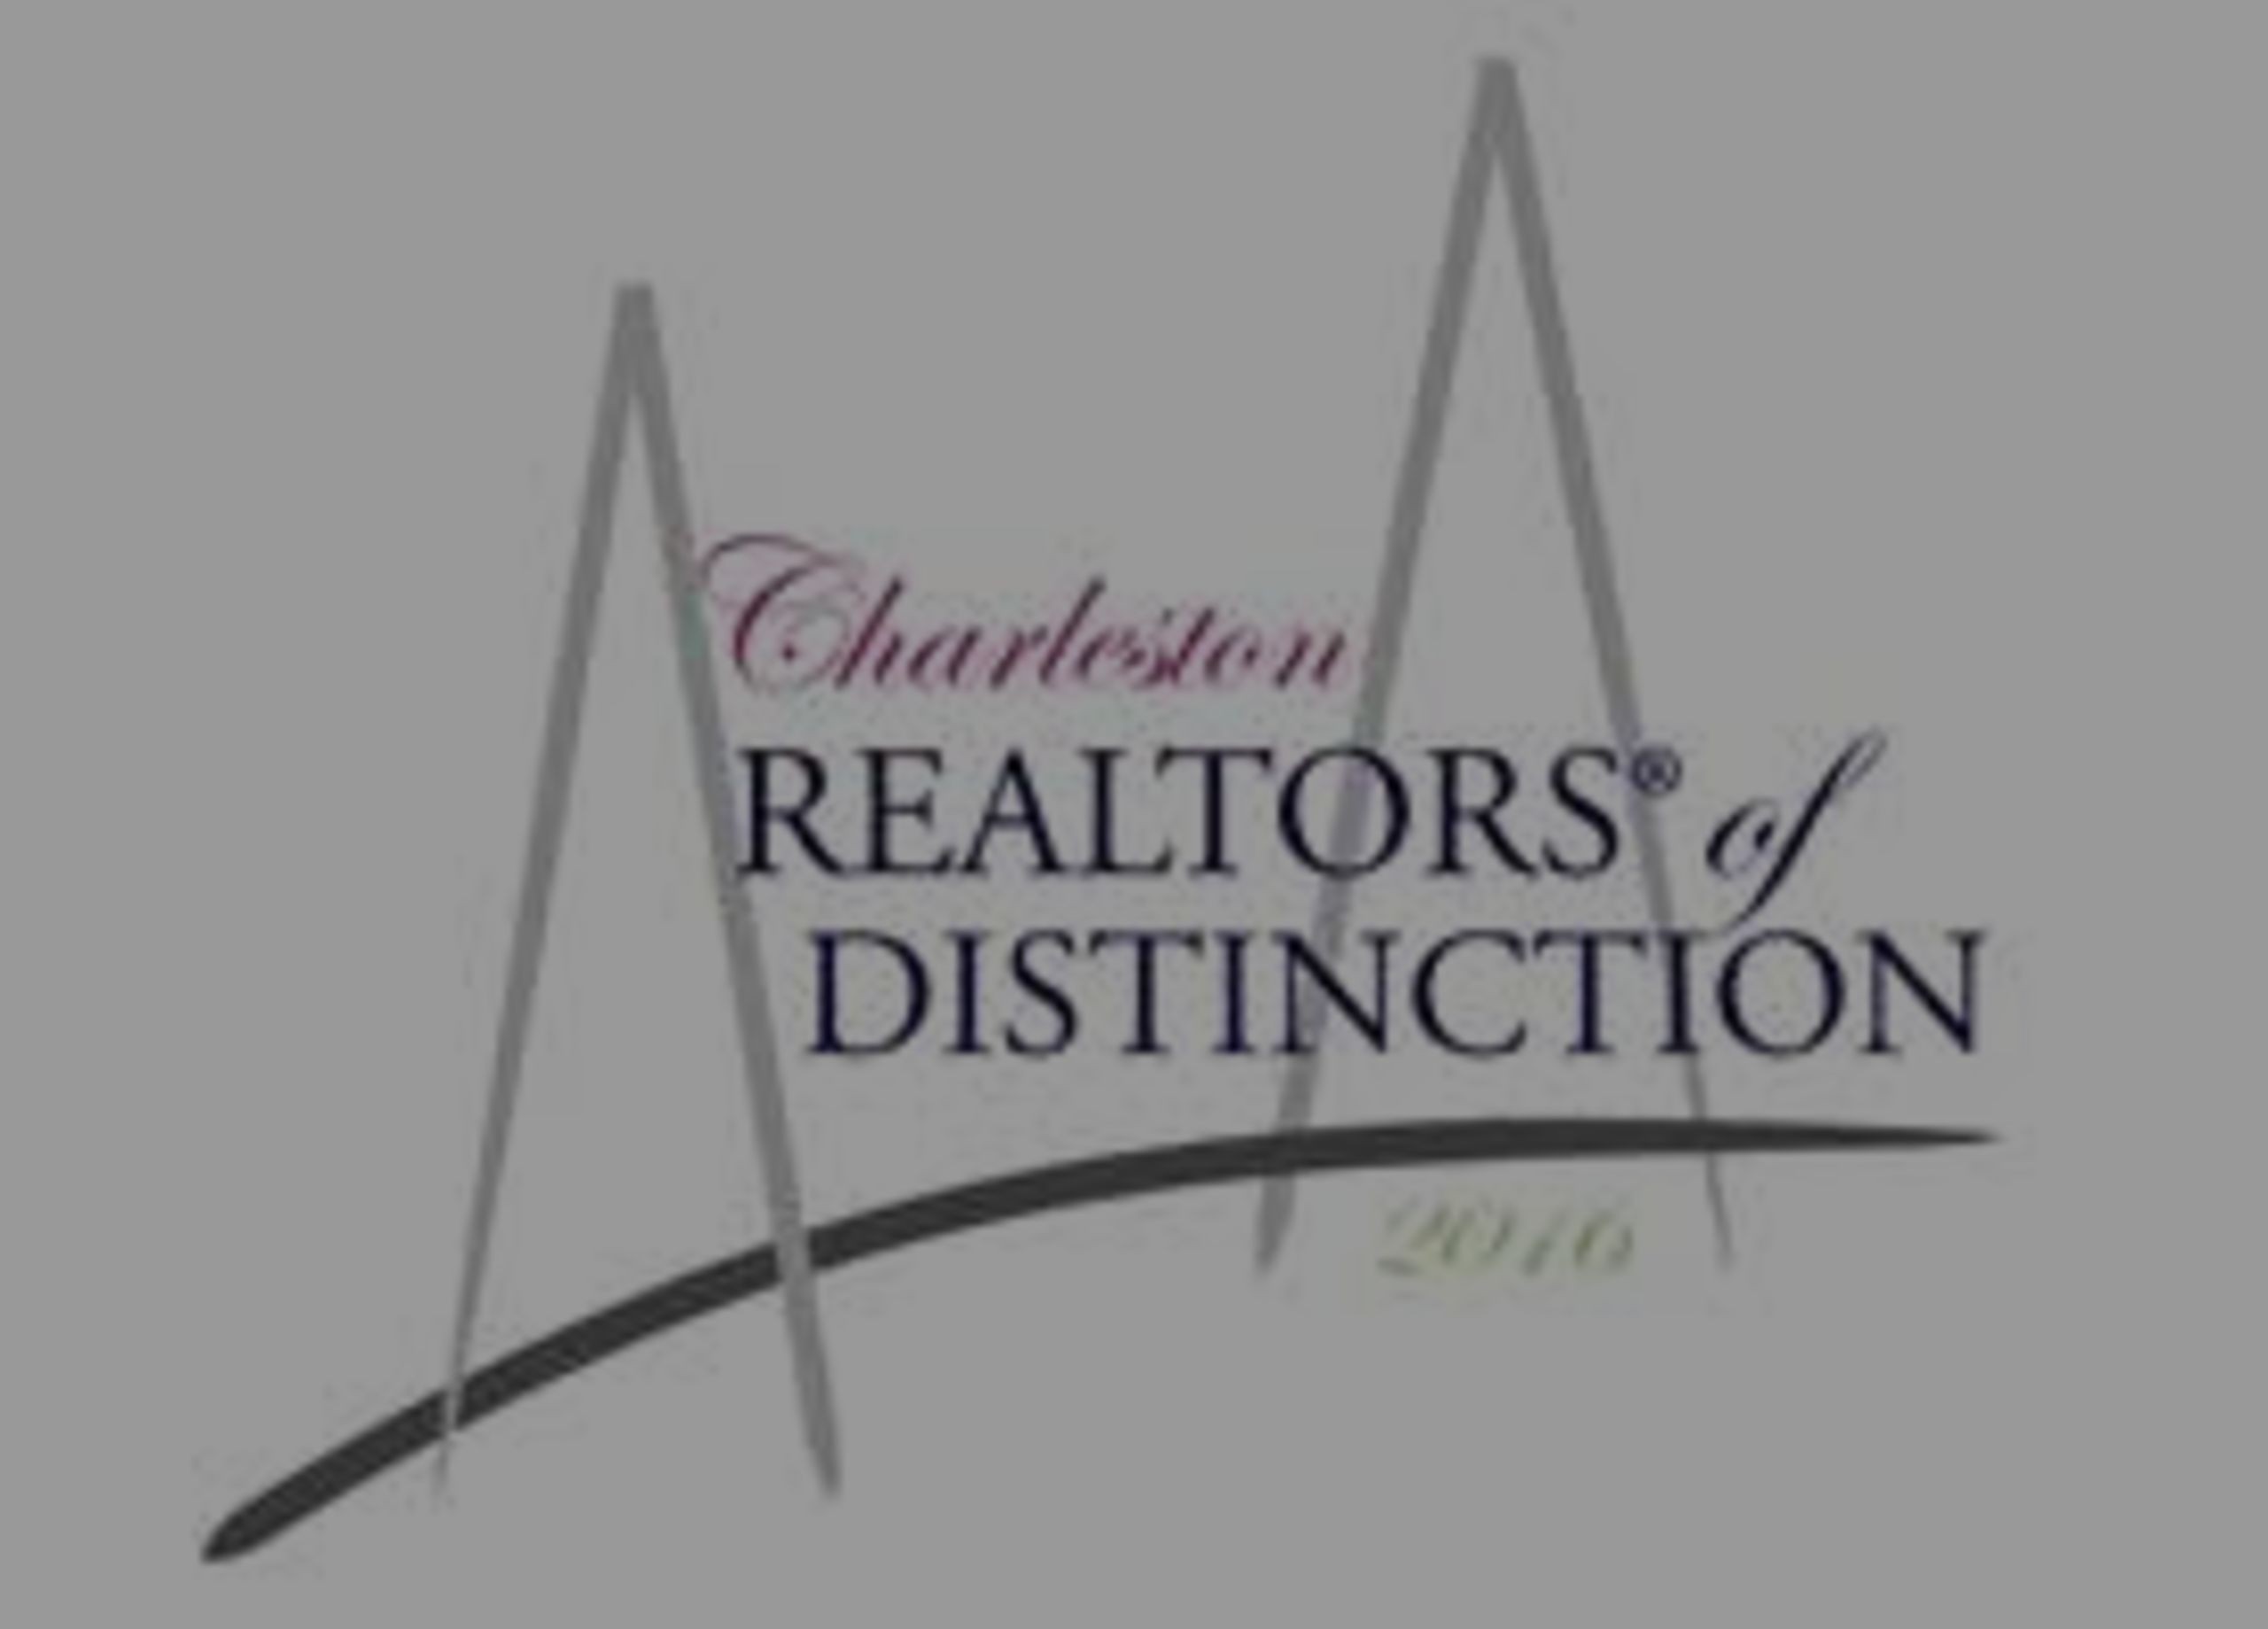 Charleston Property Group awarded &#8220;Charleston Realtors of Distinction&#8221;